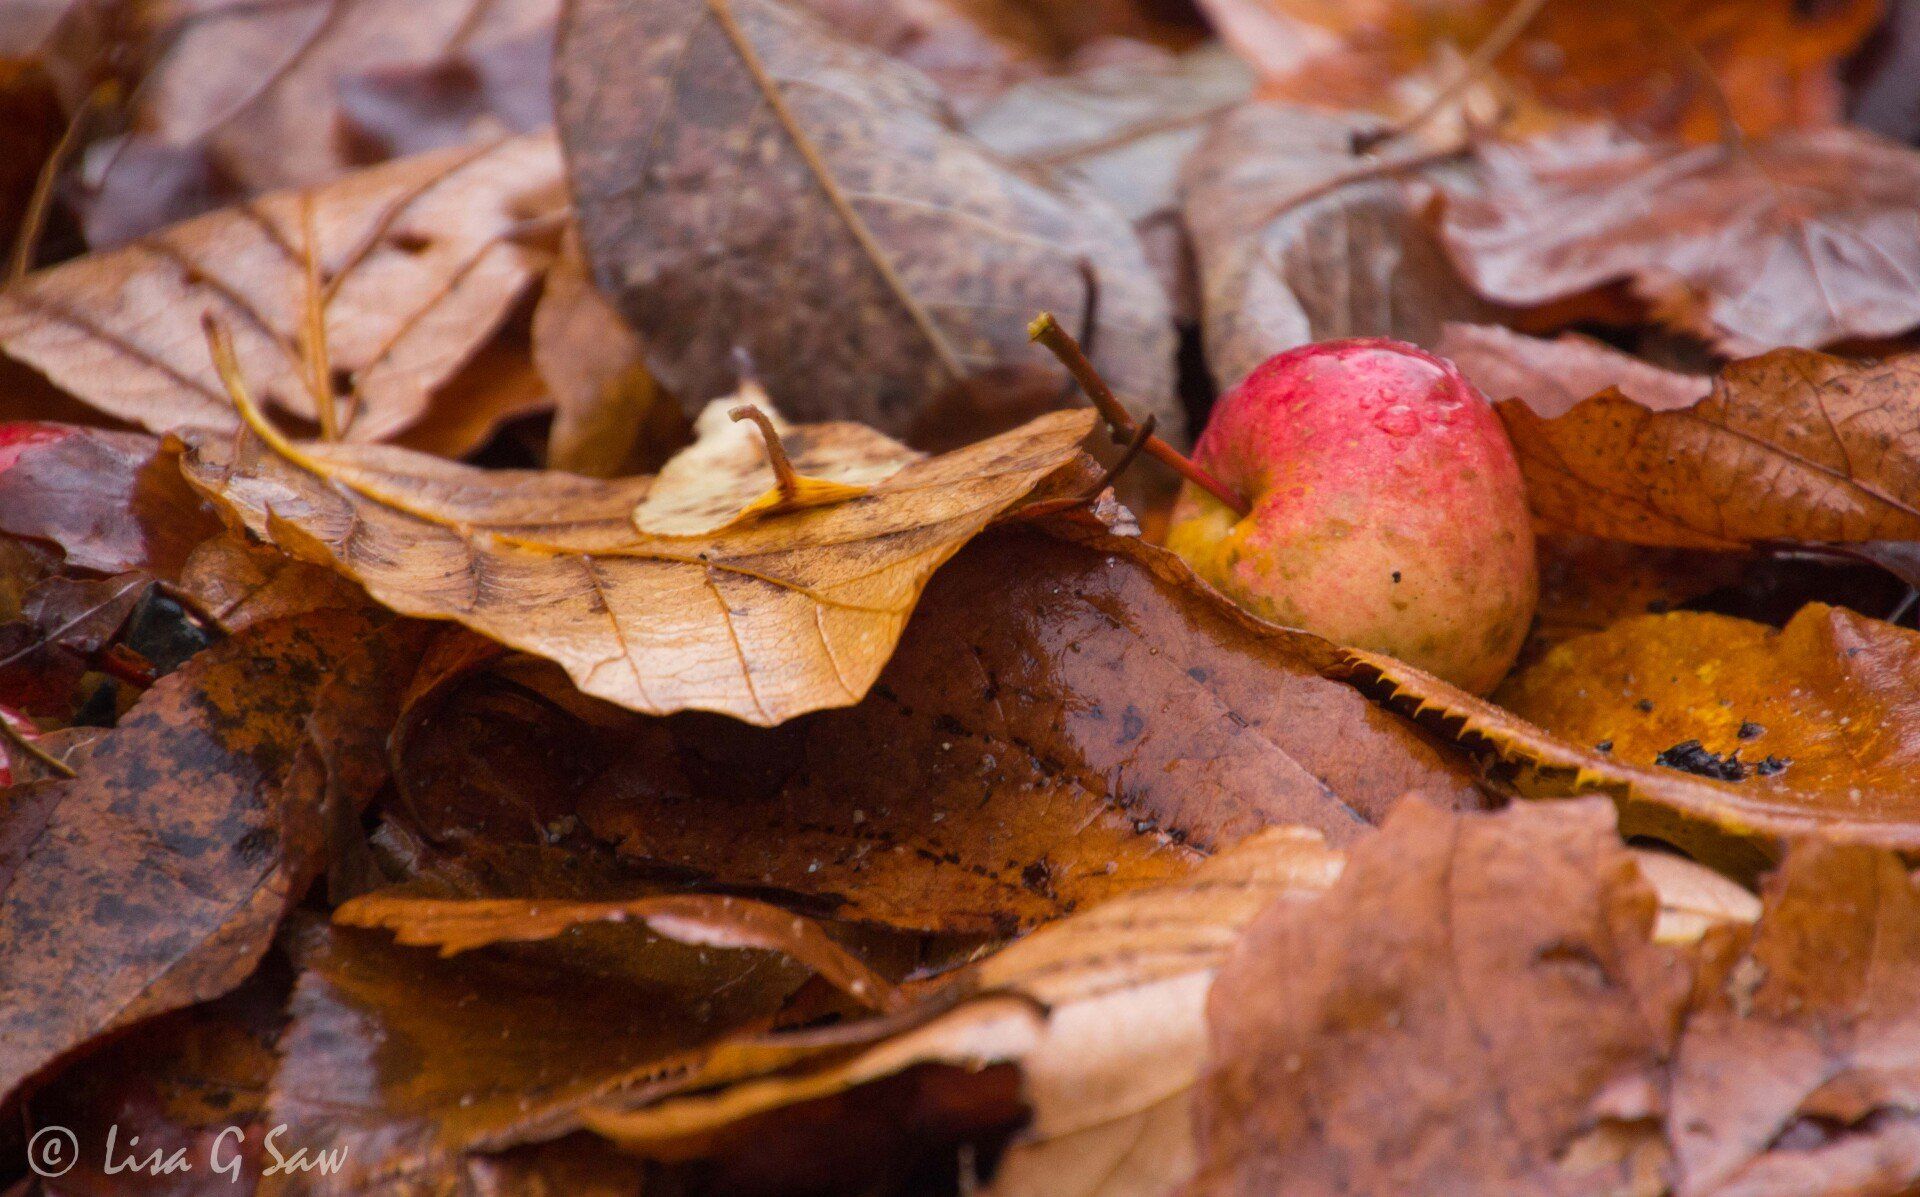 Fallen baby apple amongst autumn leaf litter